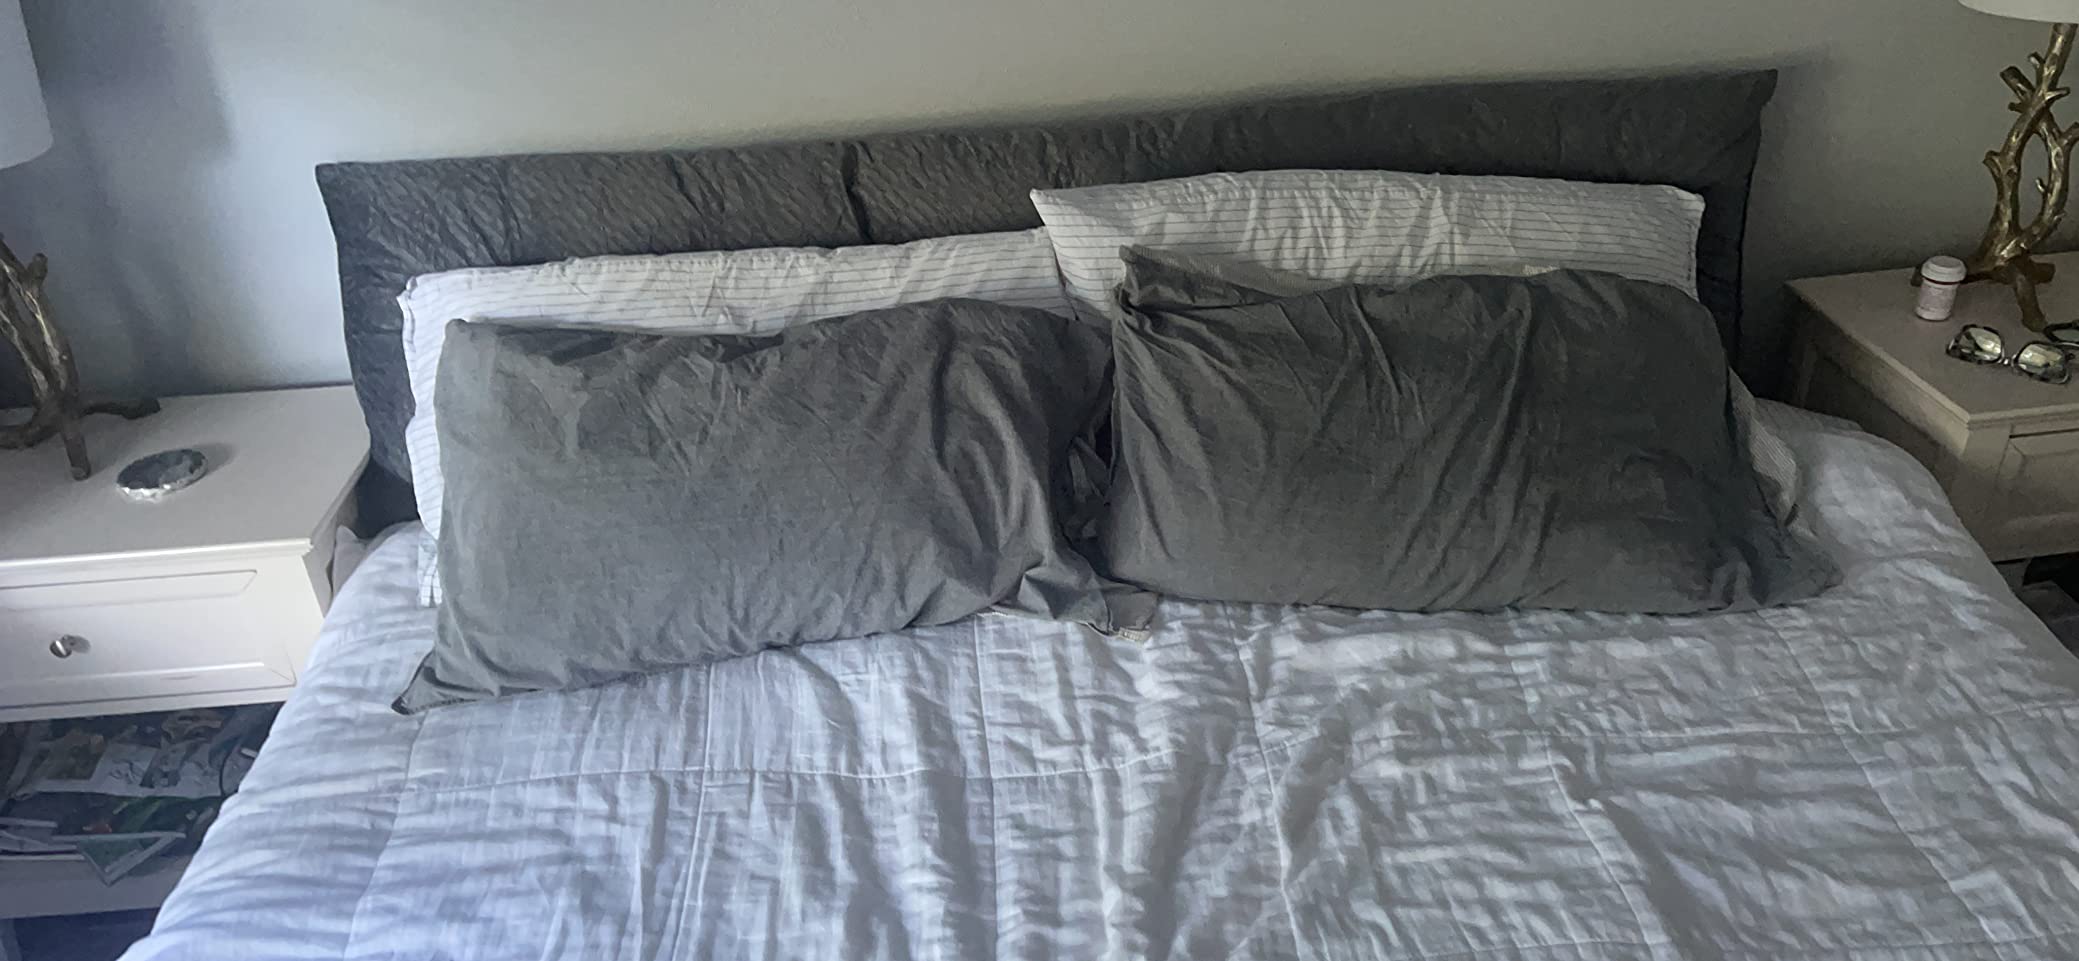 Luxury Triangular Wedge Pillow Bolster Bed Headboard photo review